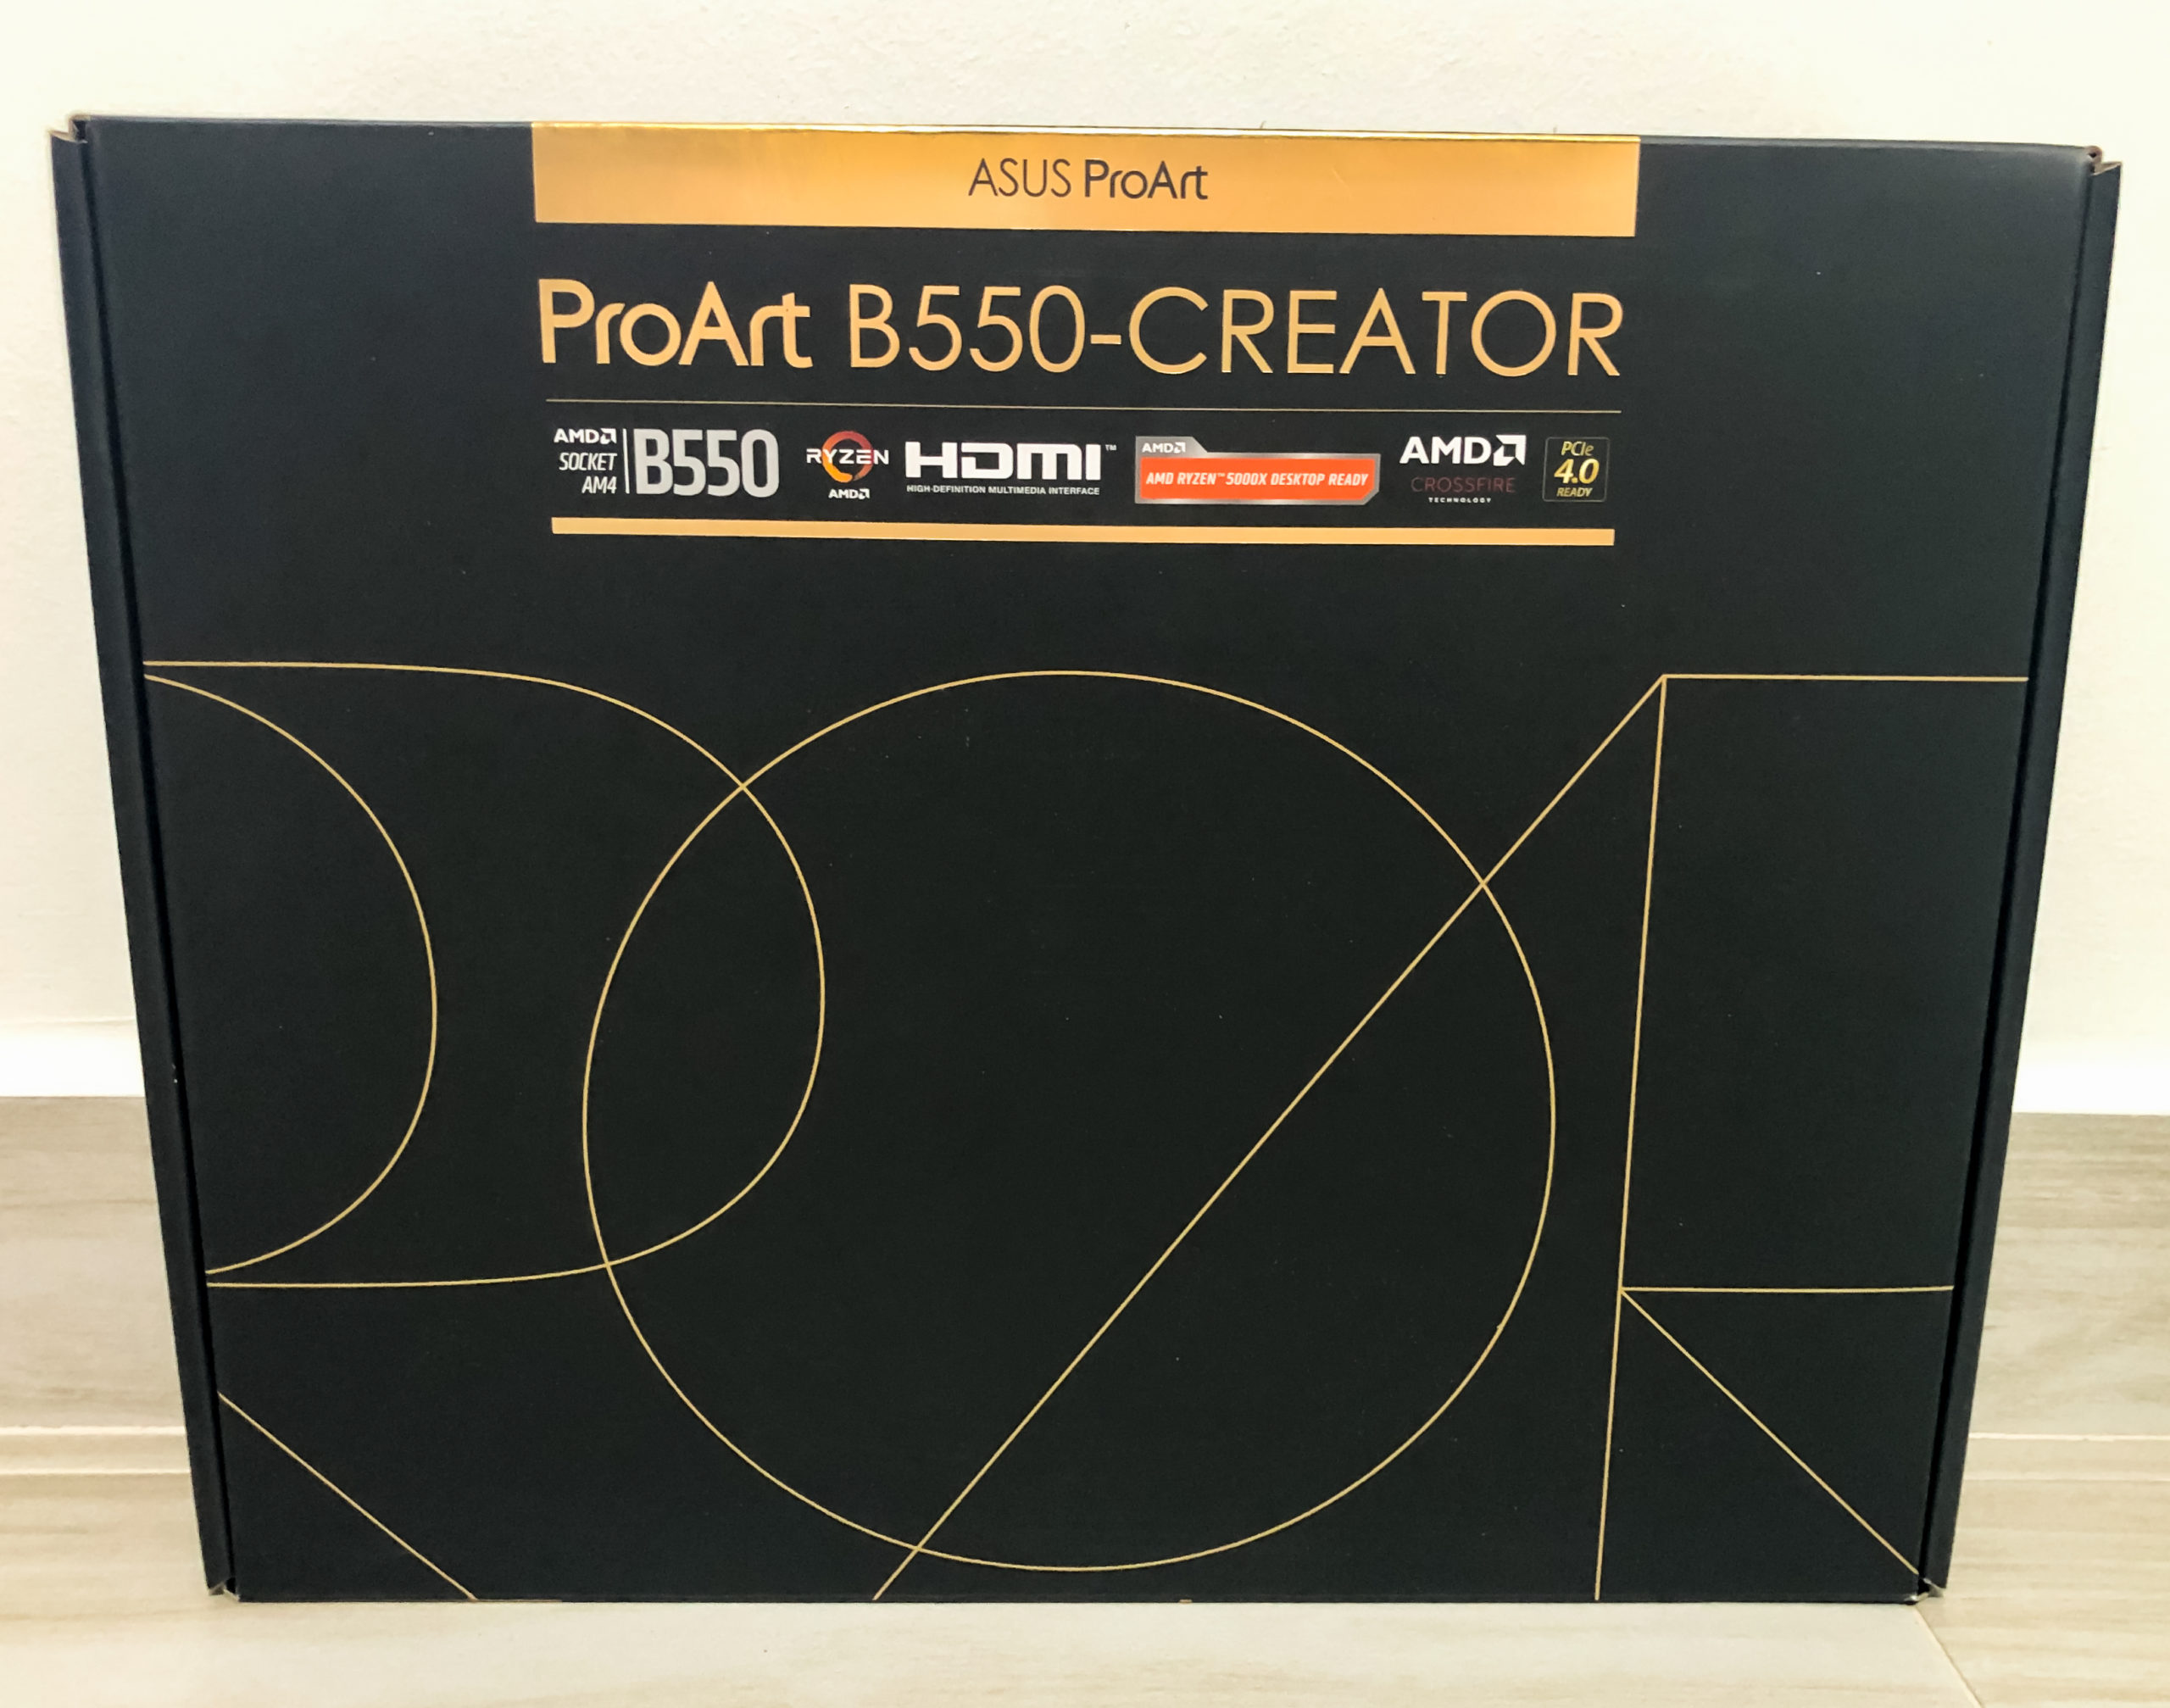 ProArt B550 Creator